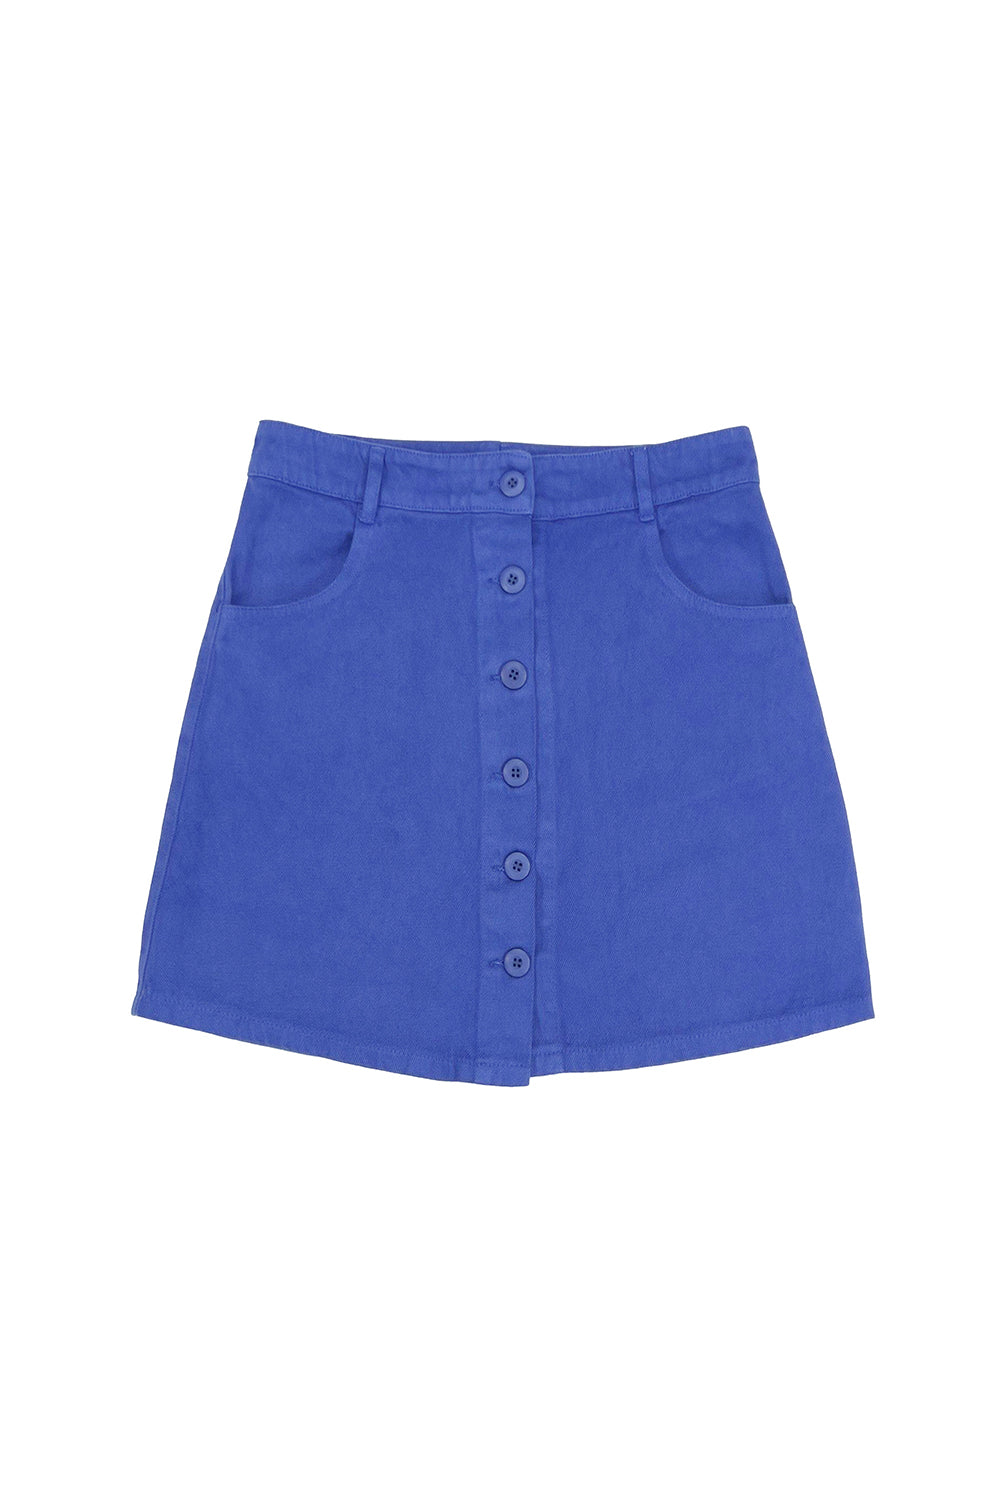 Vassar Skirt | Jungmaven Hemp Clothing & Accessories / Color: Grape Soda